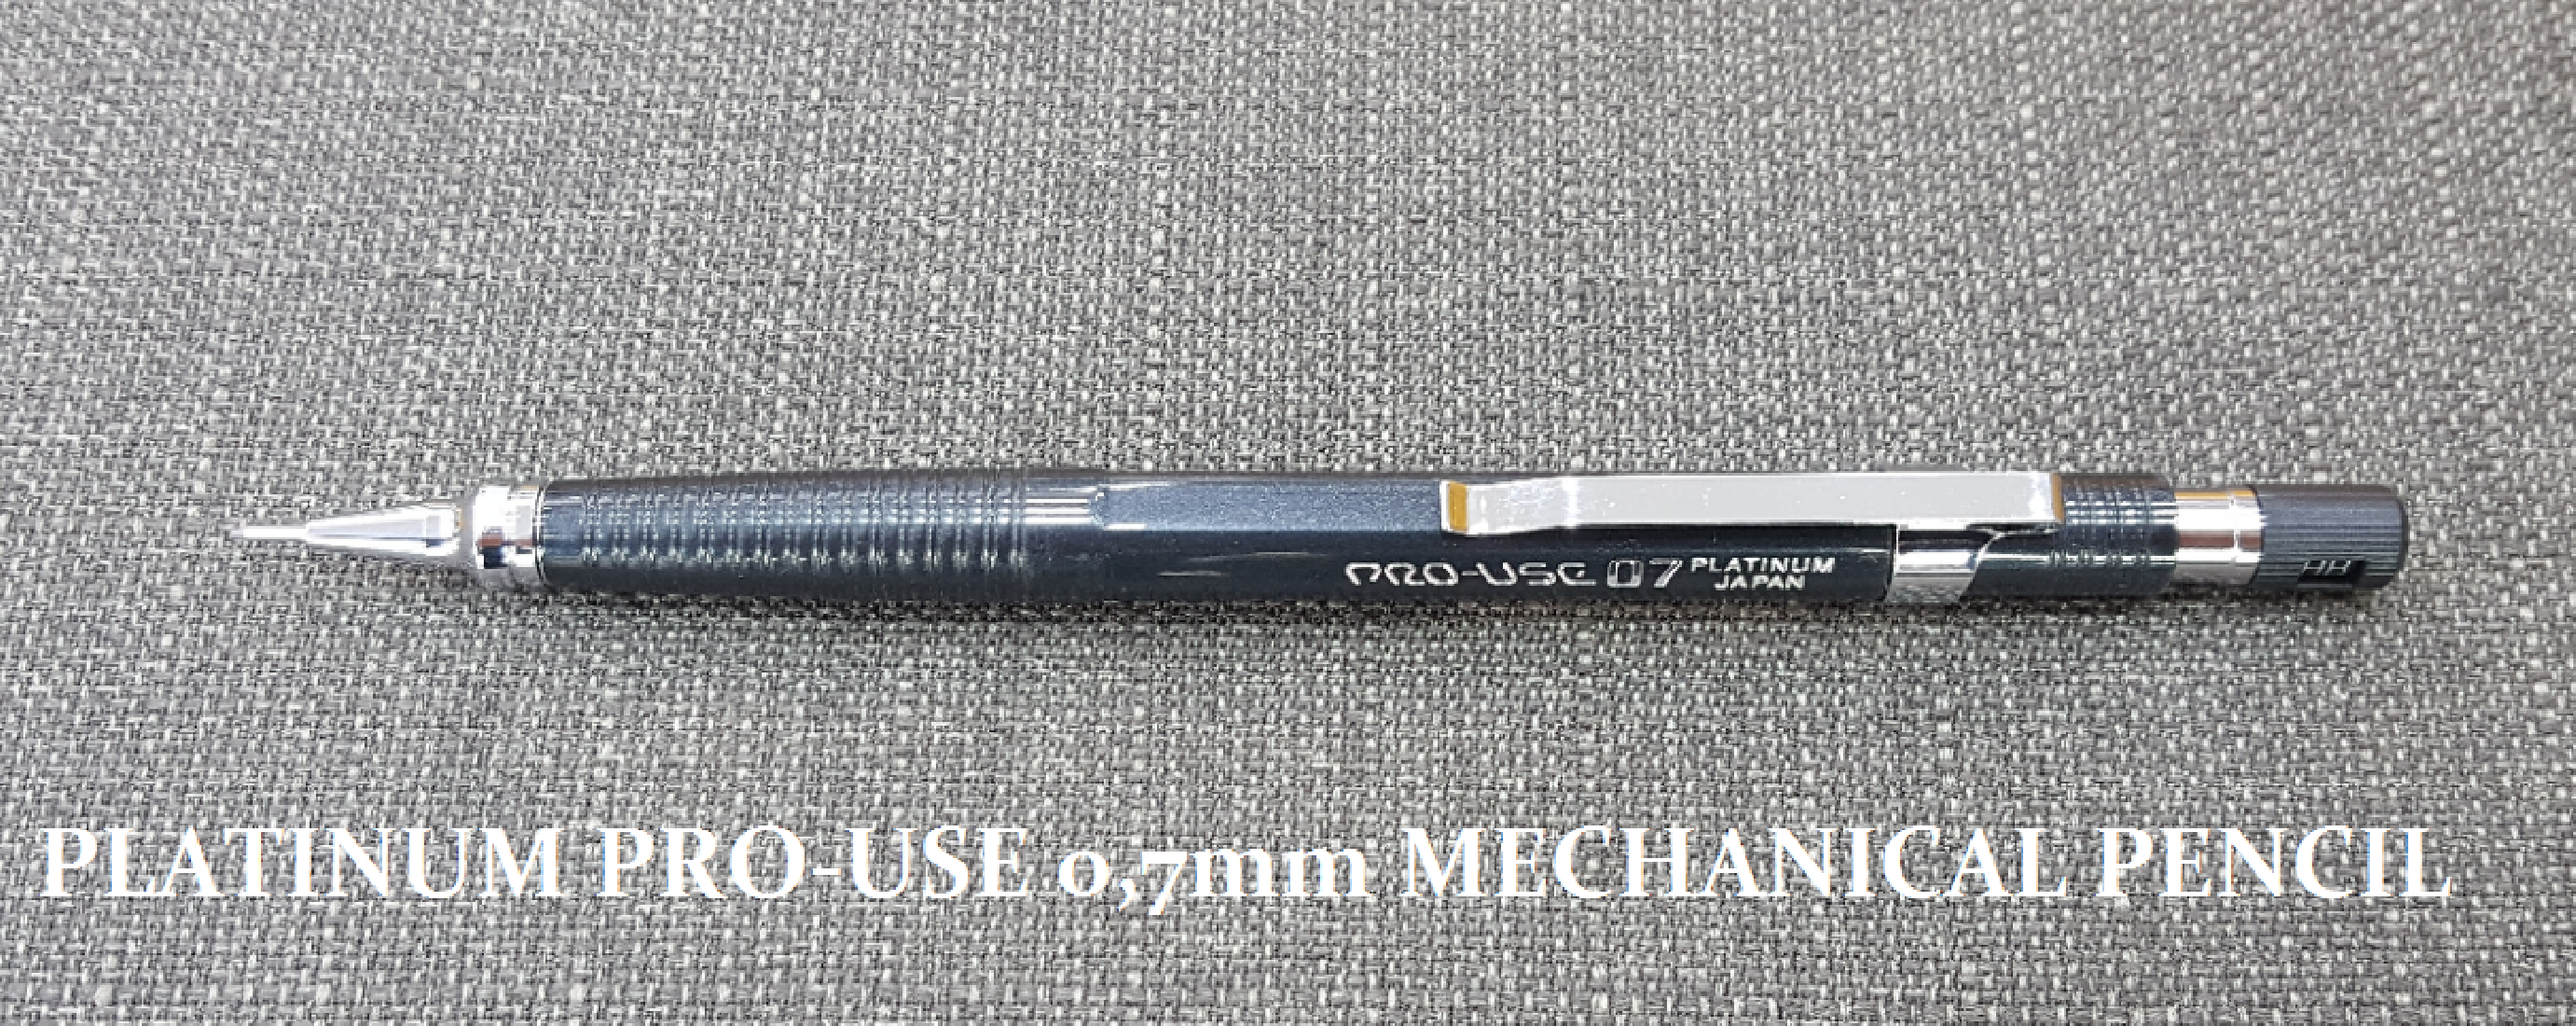 Platinum Black 0,7 Pro Use MSD-300C Mechanical Pencil